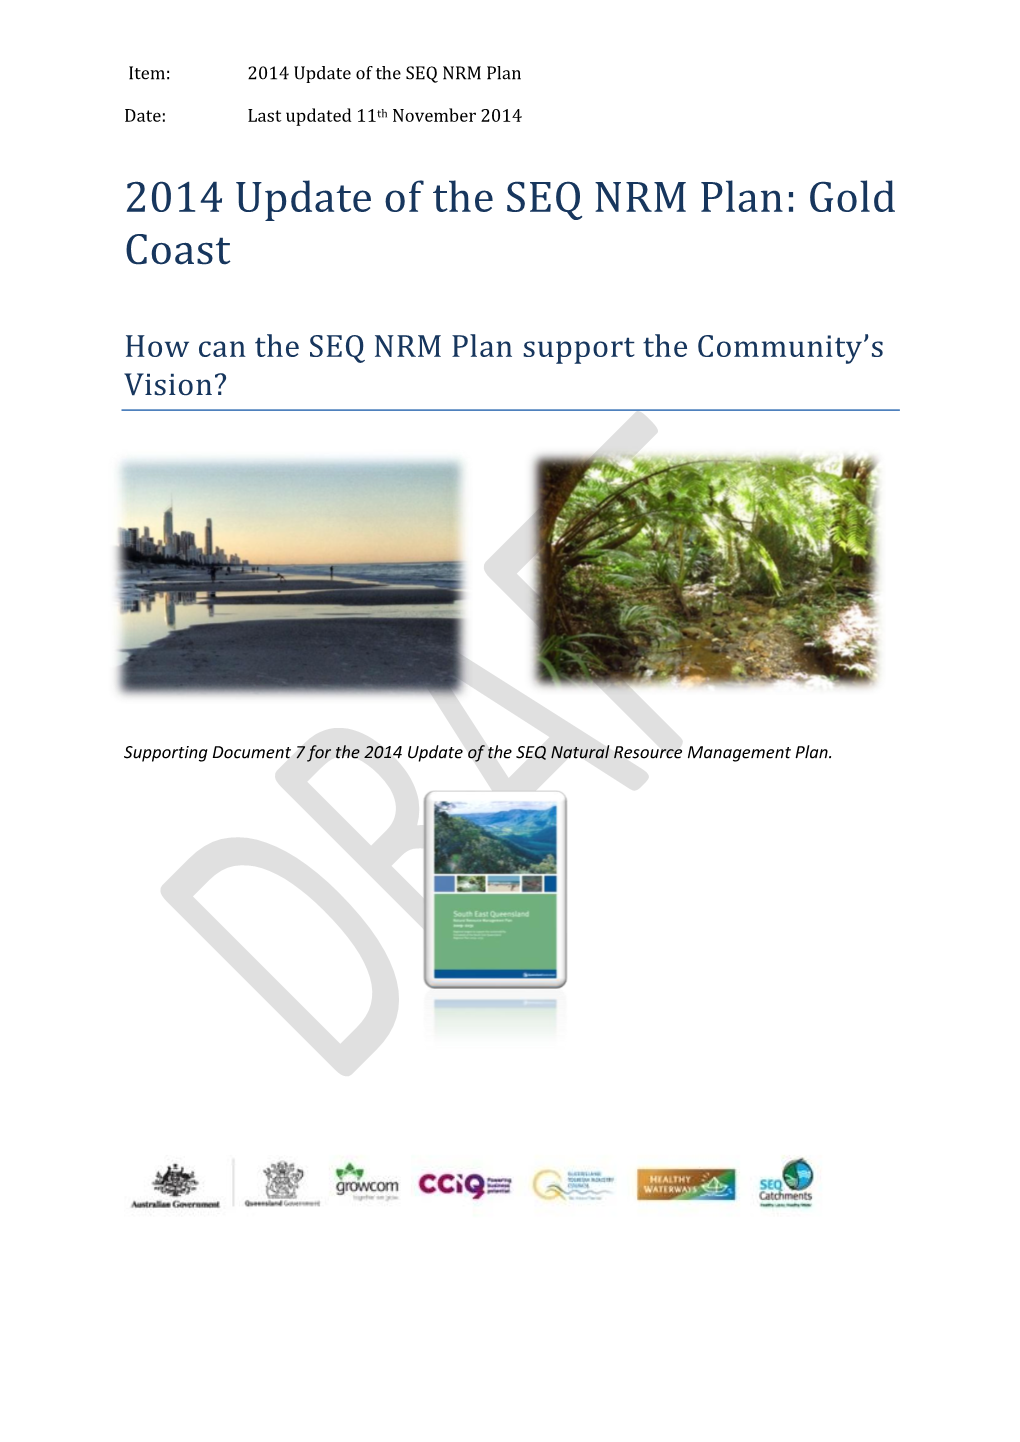 2014 Update of the SEQ NRM Plan: Gold Coast